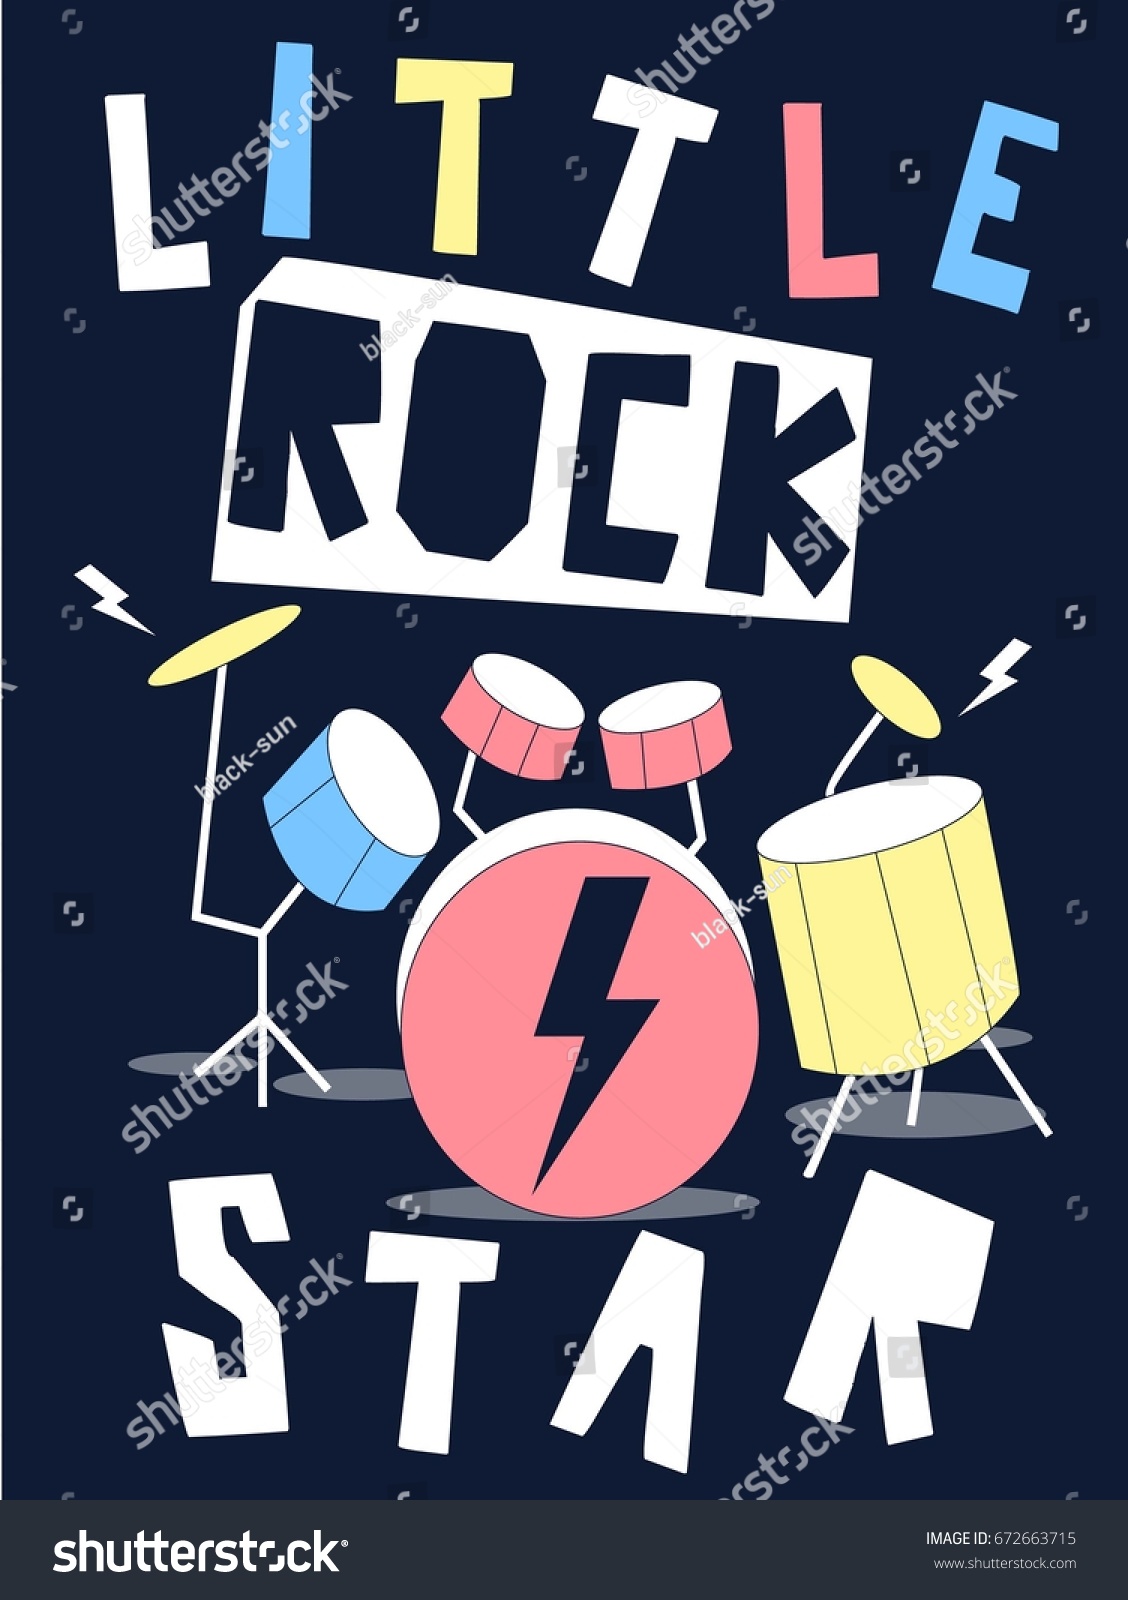 TRIKA - Little Rock Star